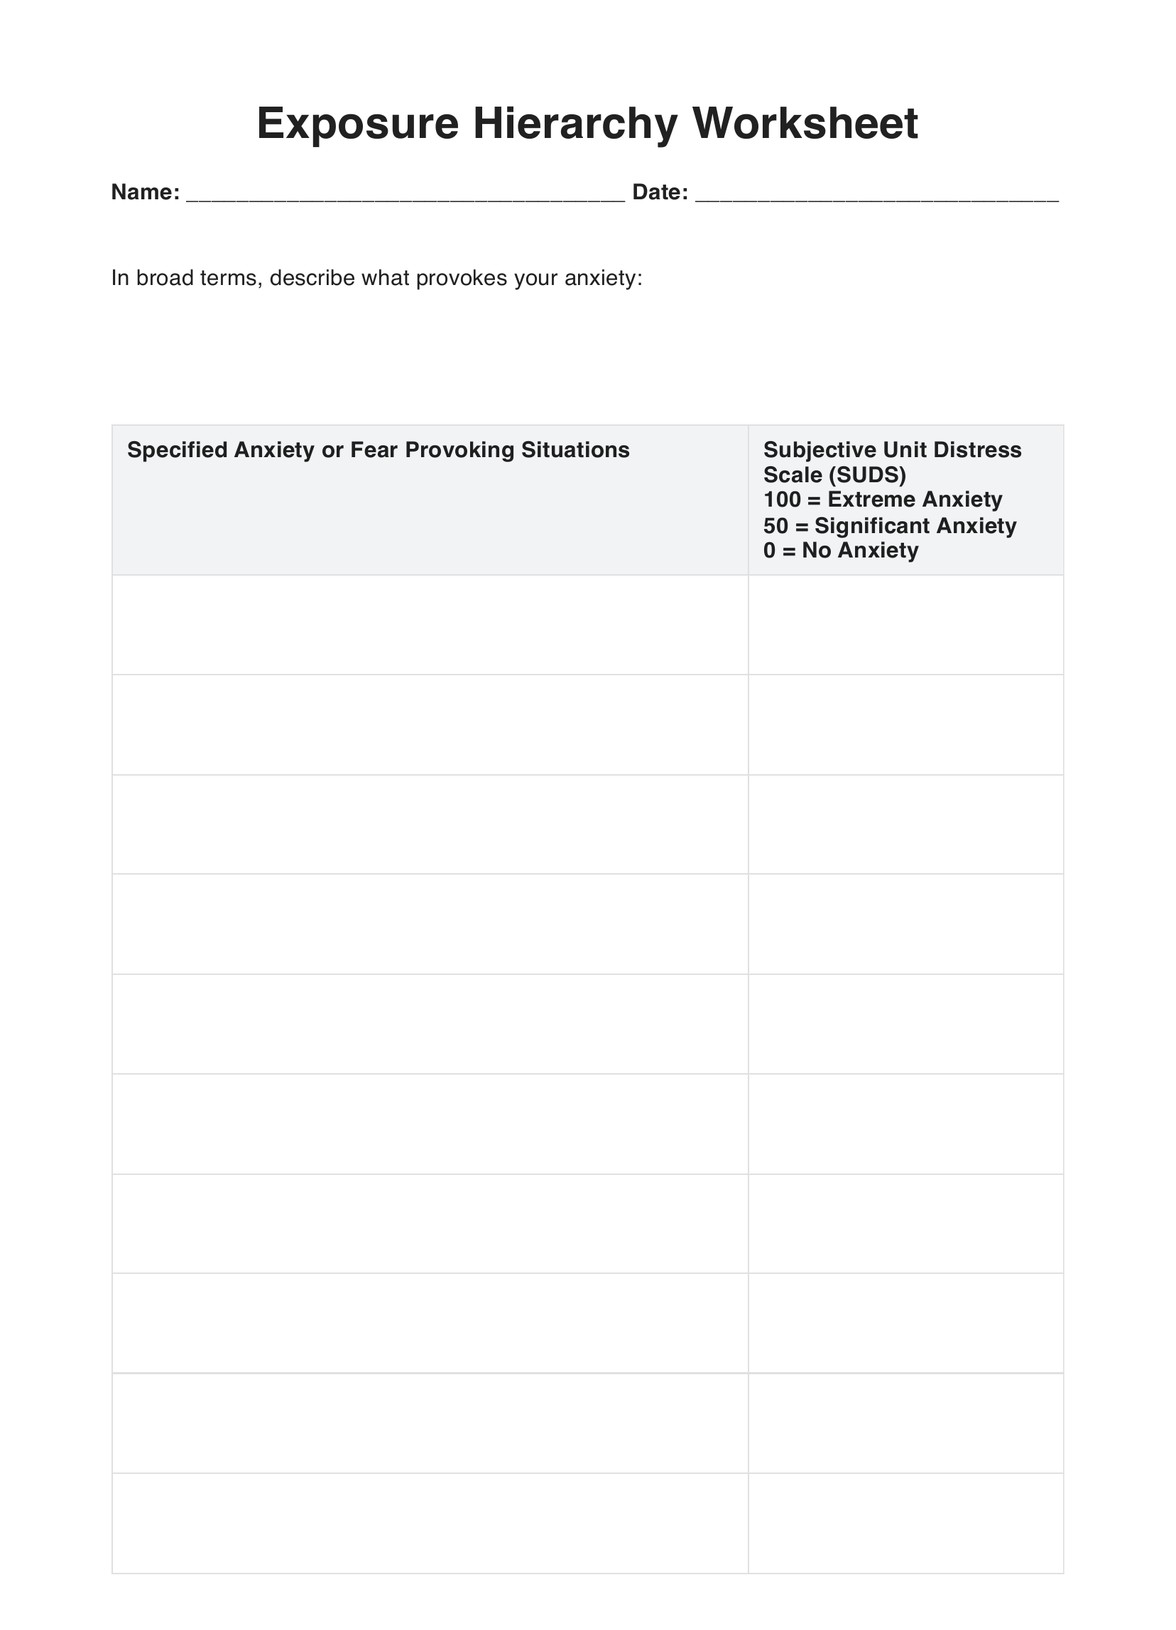 Exposure Hierarchy Worksheet PDF Example